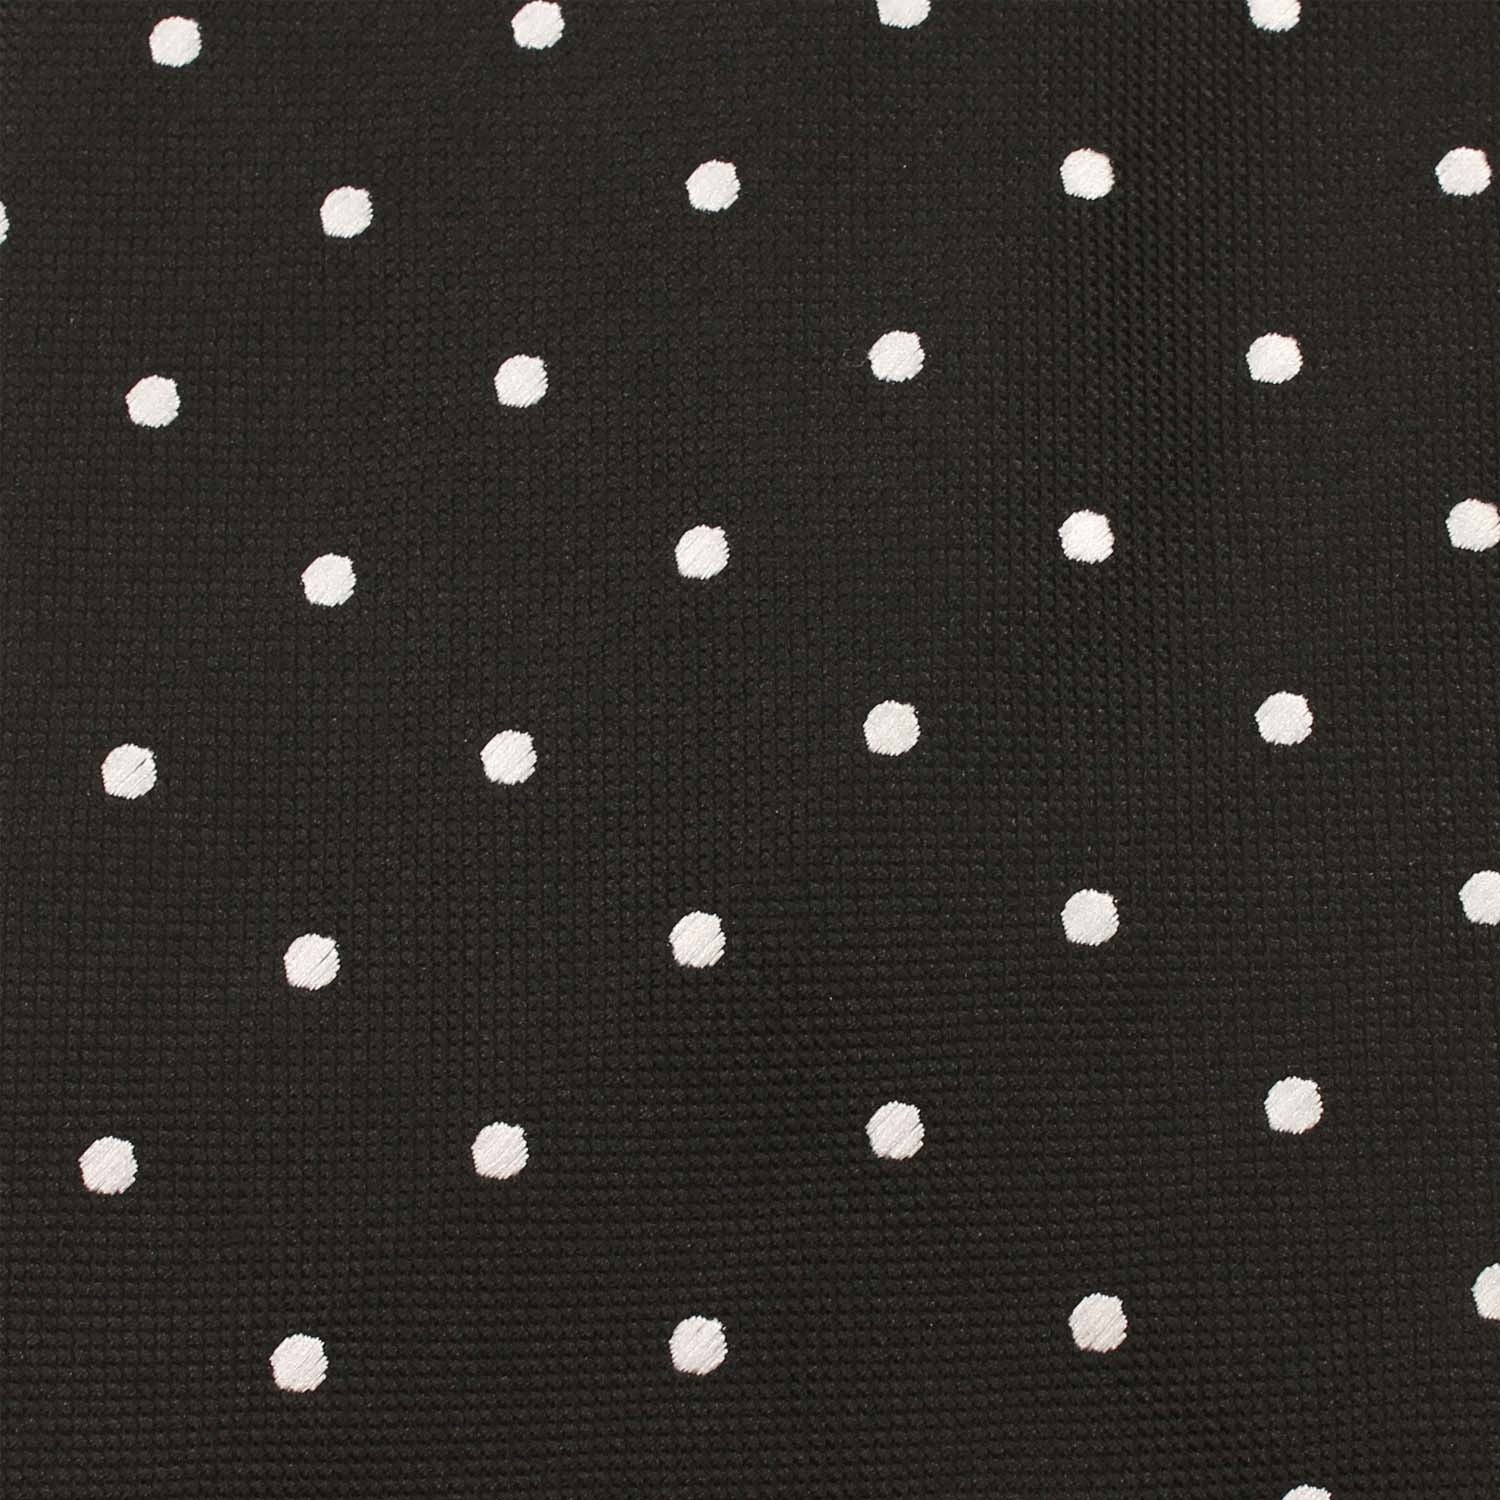 Coal Black with White Polka Dots Fabric Skinny Tie X327